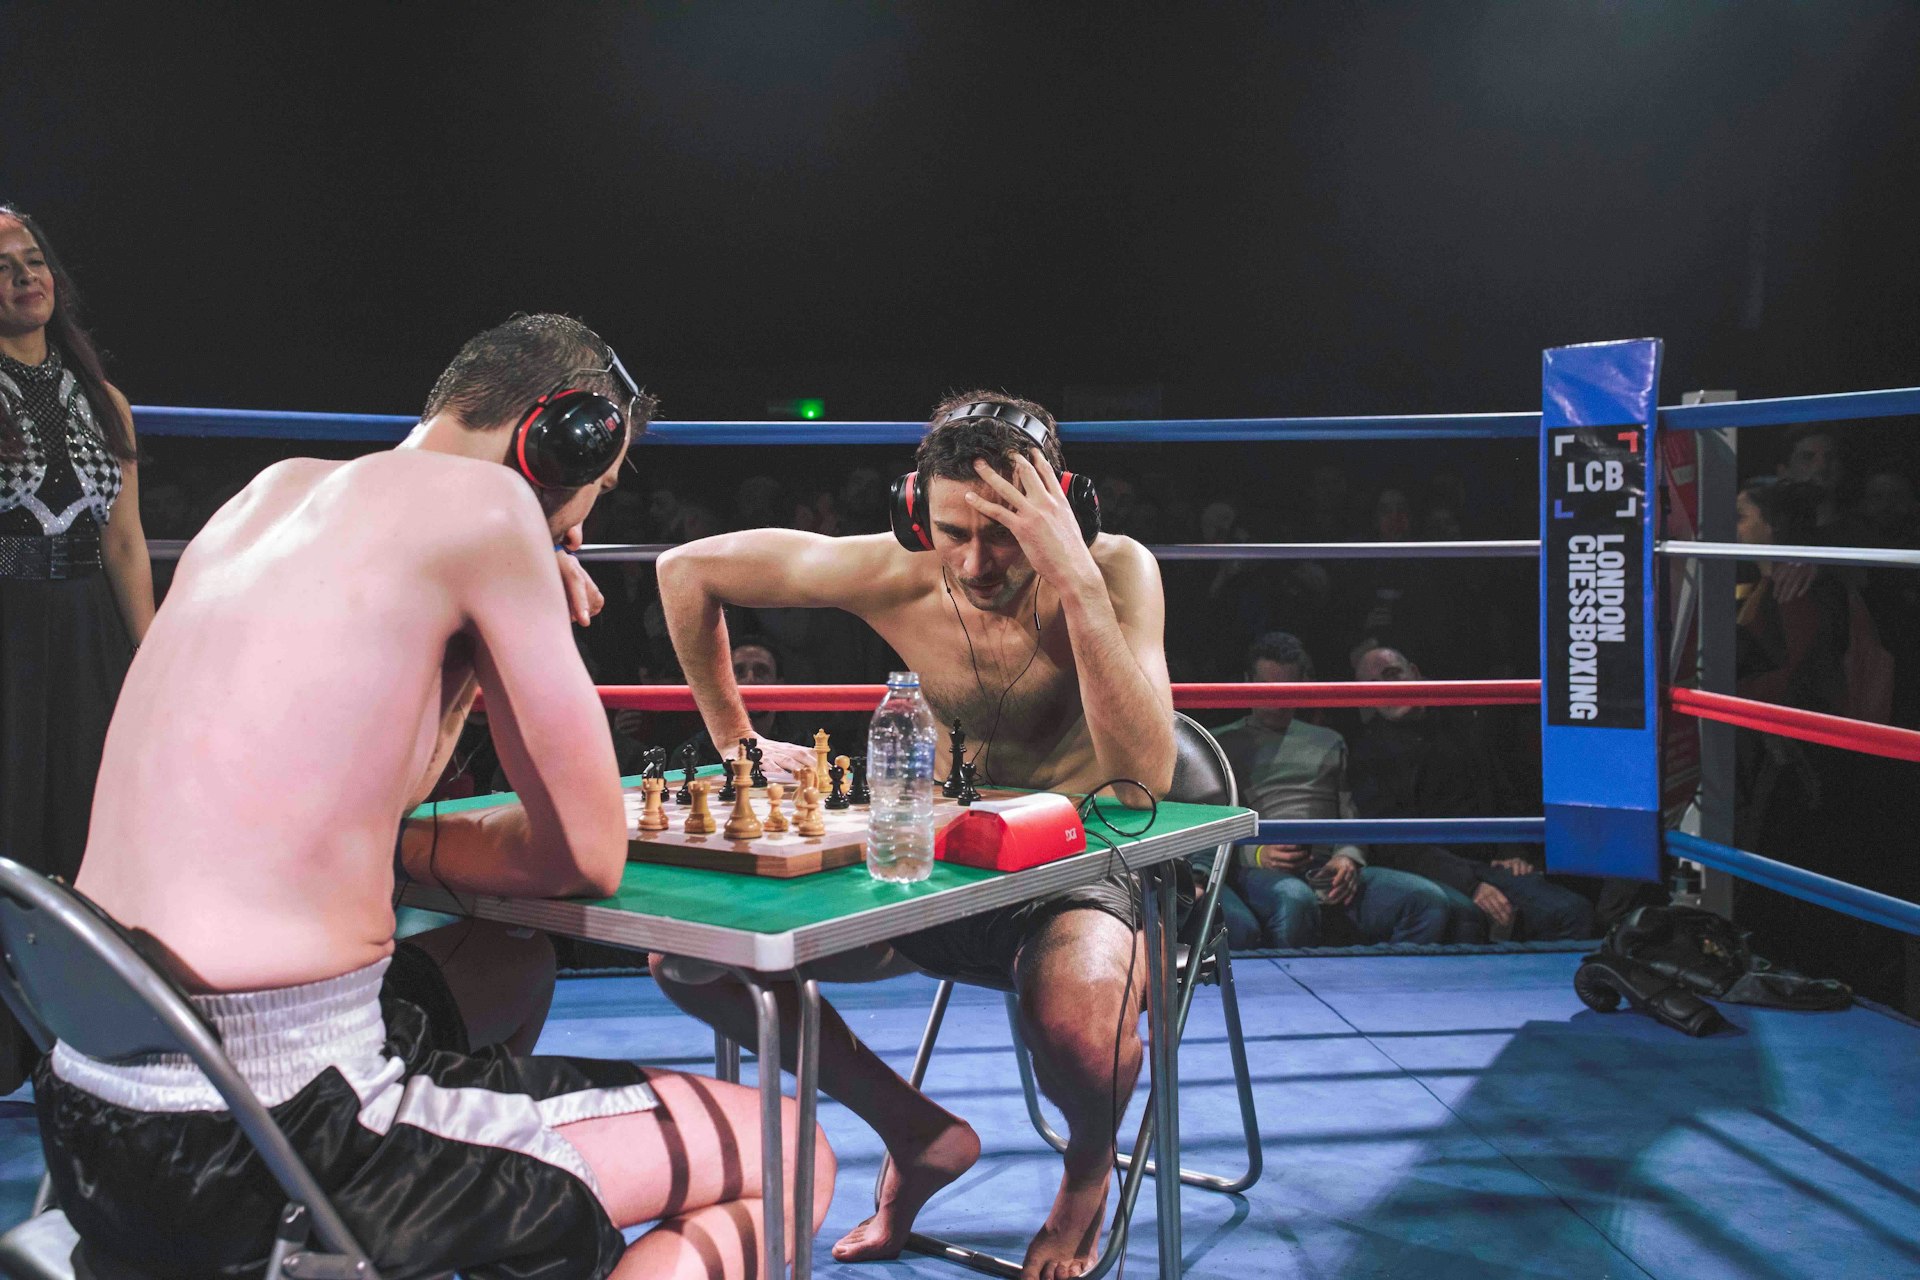 Chessboxing: the new craze where brain meets brawn